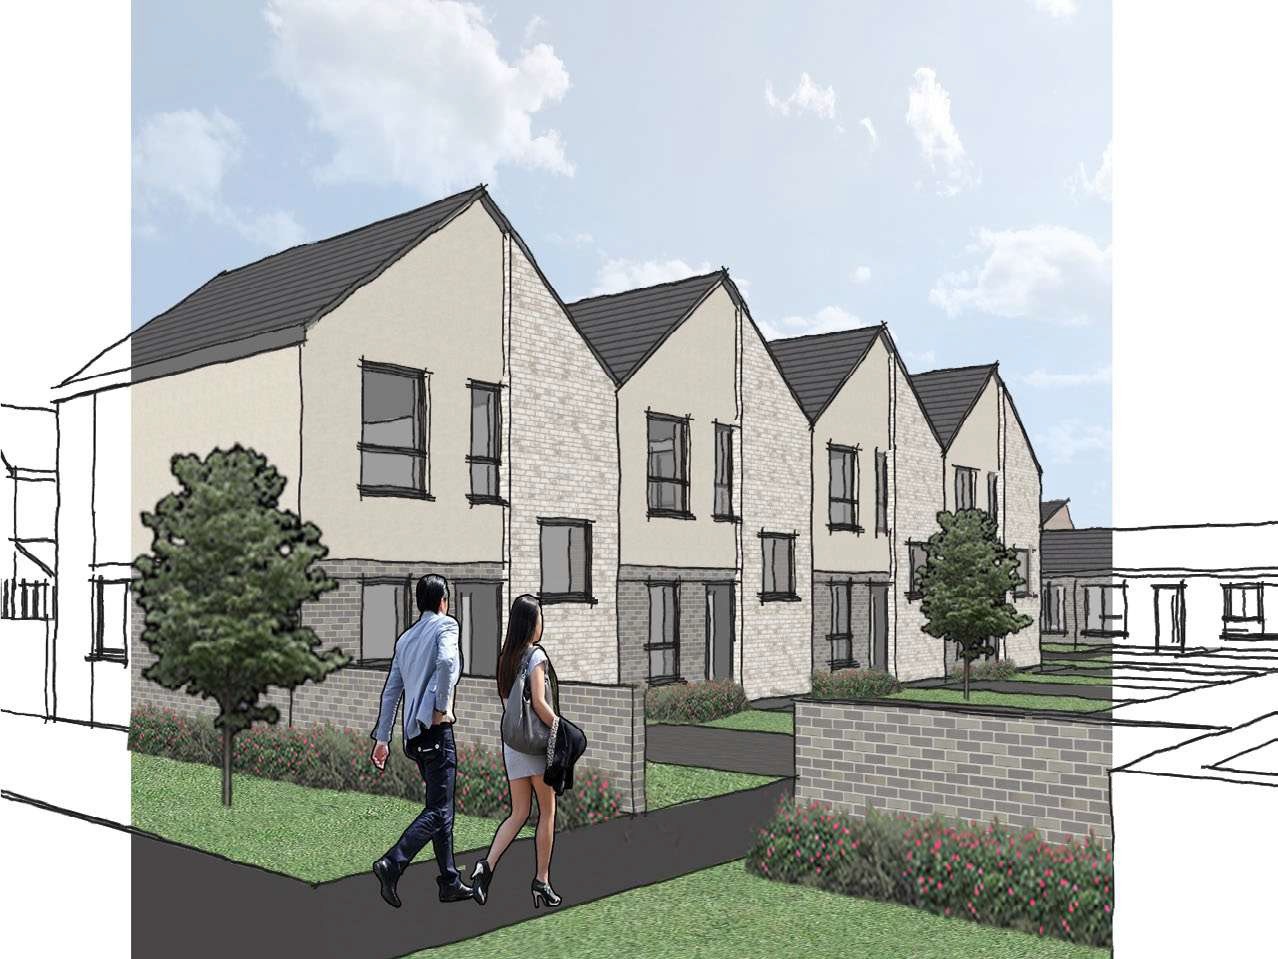 Former Irvine school makes way for 50 homes : June 2020 : News